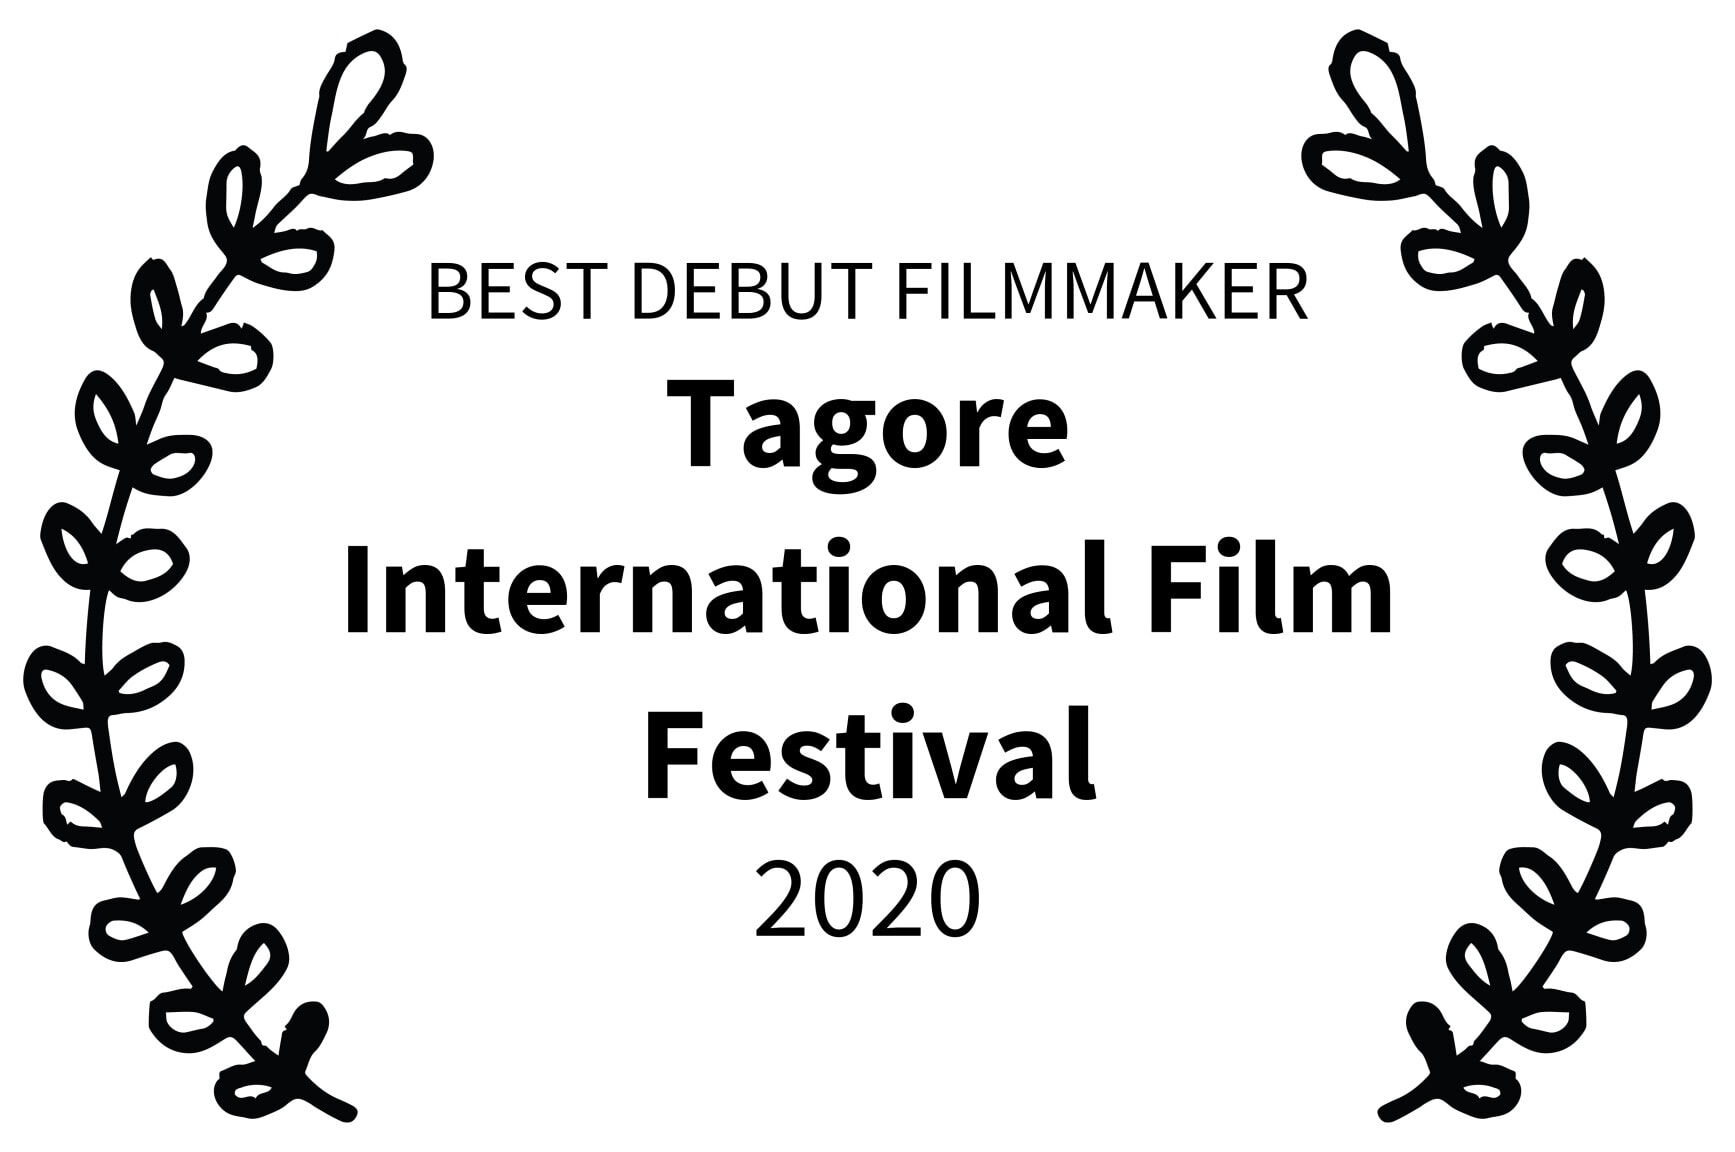 BEST DEBUT FILMMAKER - Tagore International Film Festival - 2020